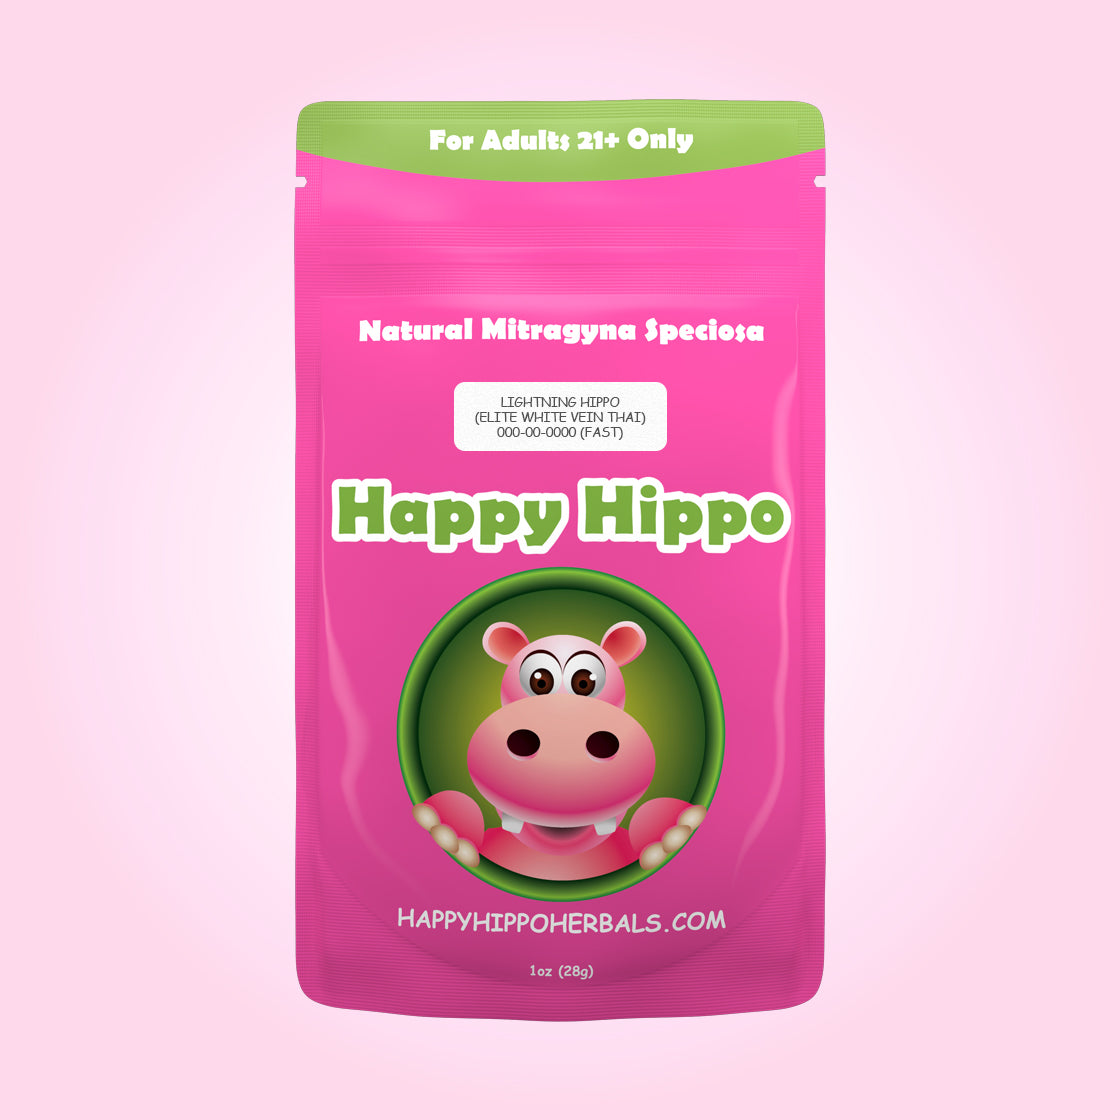 Product Image depicting a 1oz bag of Happy Hippo White Vein Thai Kratom Powder (Mitragyna Speciosa).